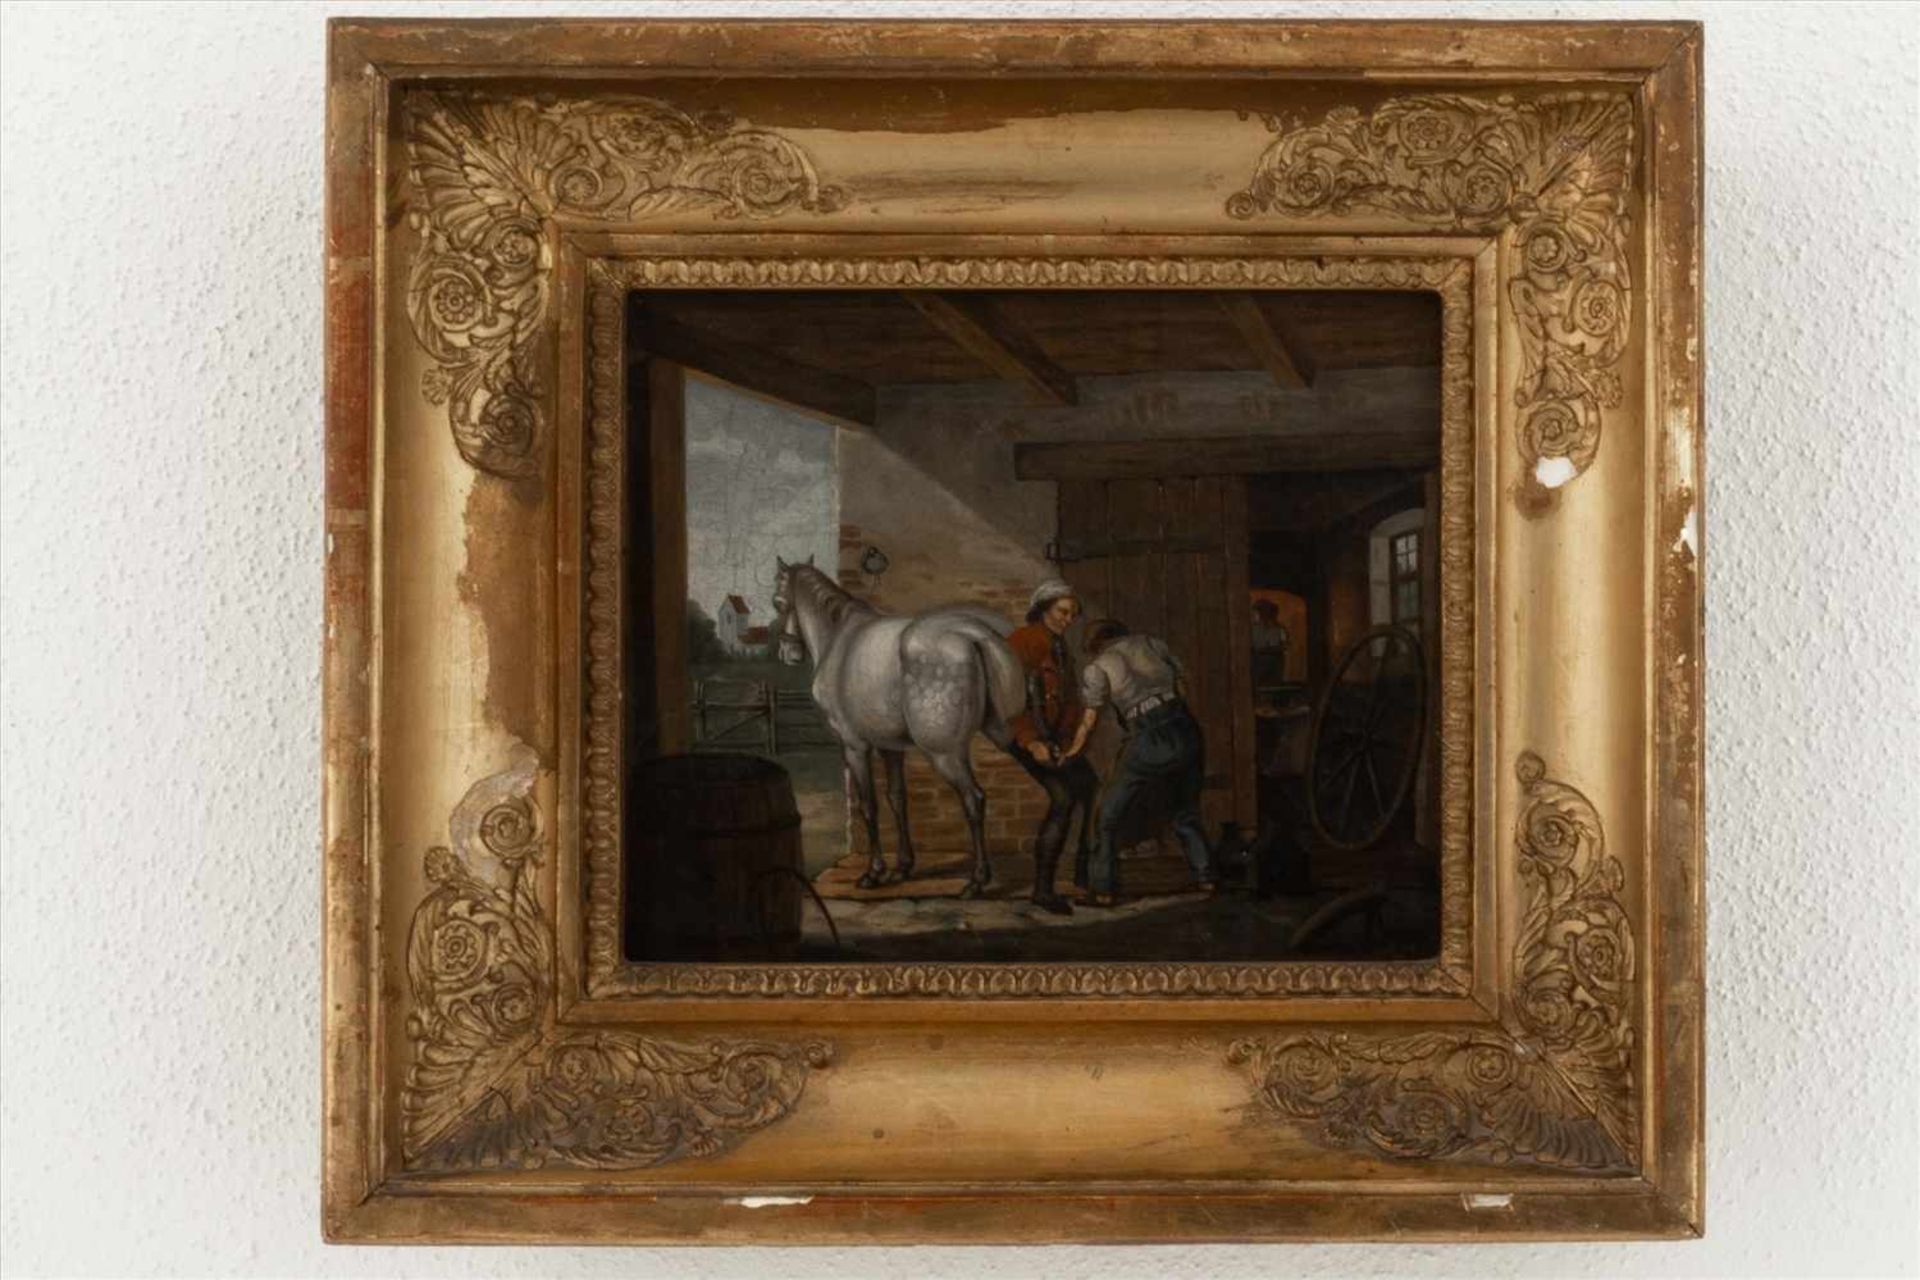 Biedermeier Gemälde "Im Pferdestall"Öl/Lwd. um 1820, Rahmen rest. bed. Maße: H31,5 x B35,